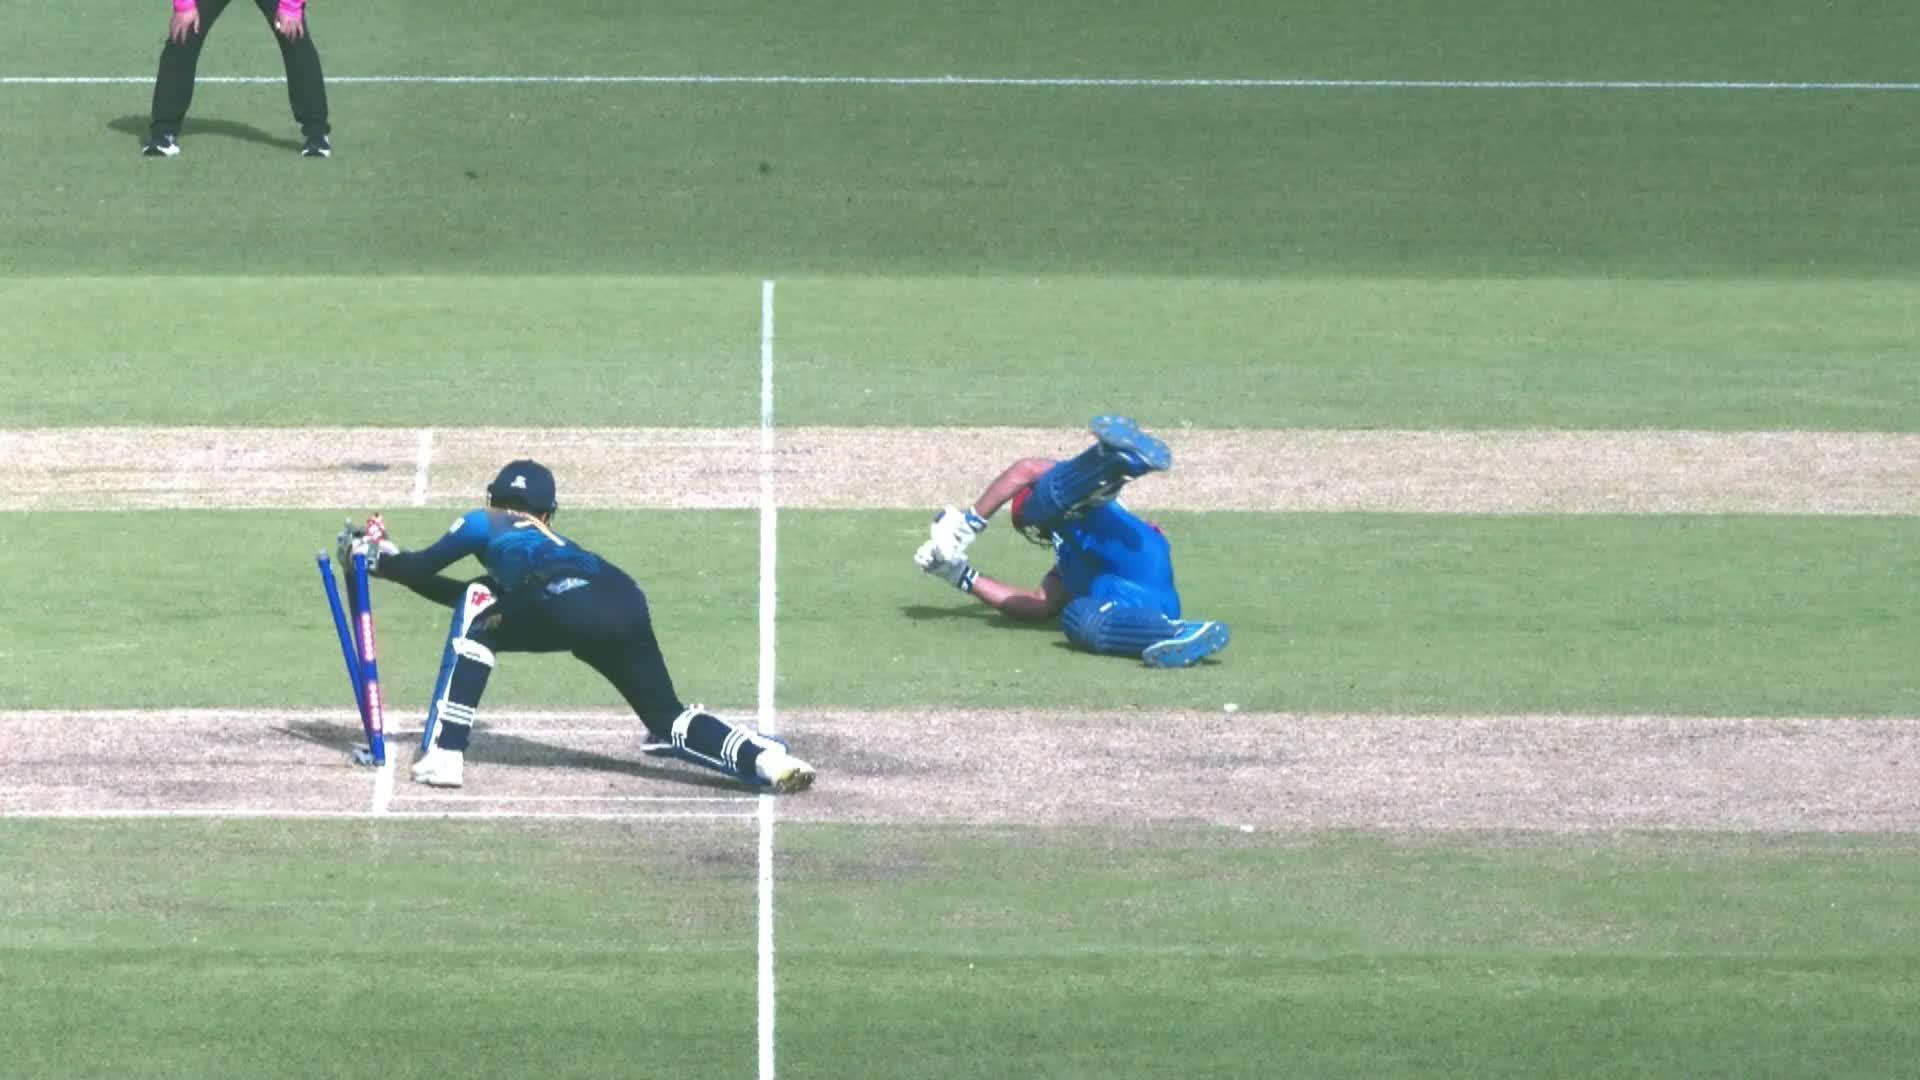 Sri Lanka vs Afghanistan Gulbadin Naib Run out video goes viral